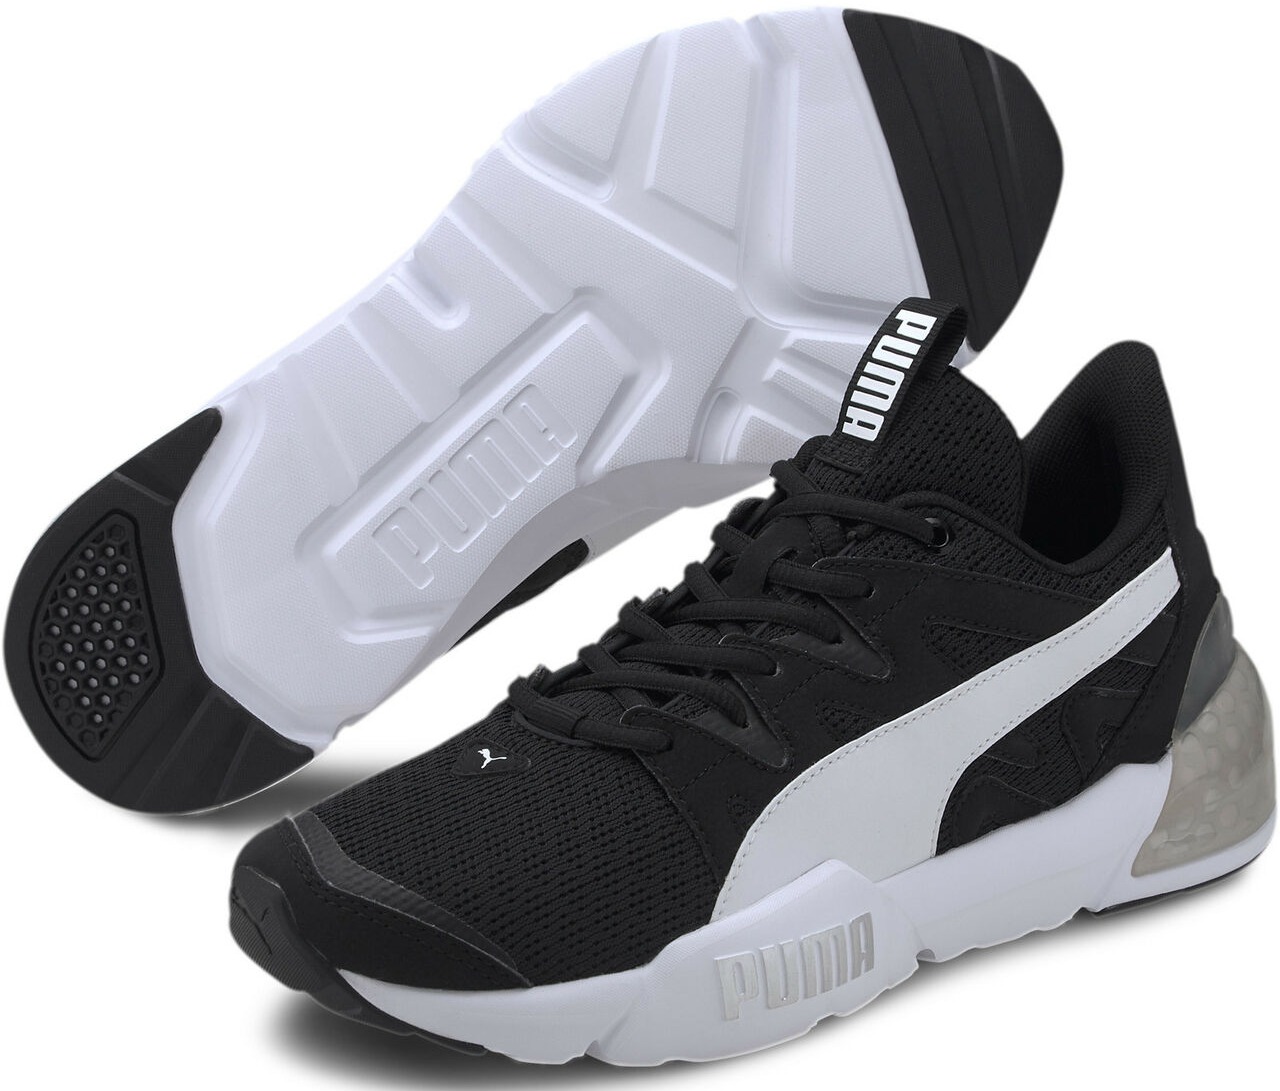 Puma Men's Cell Pharos Training Shoes - DealWiki